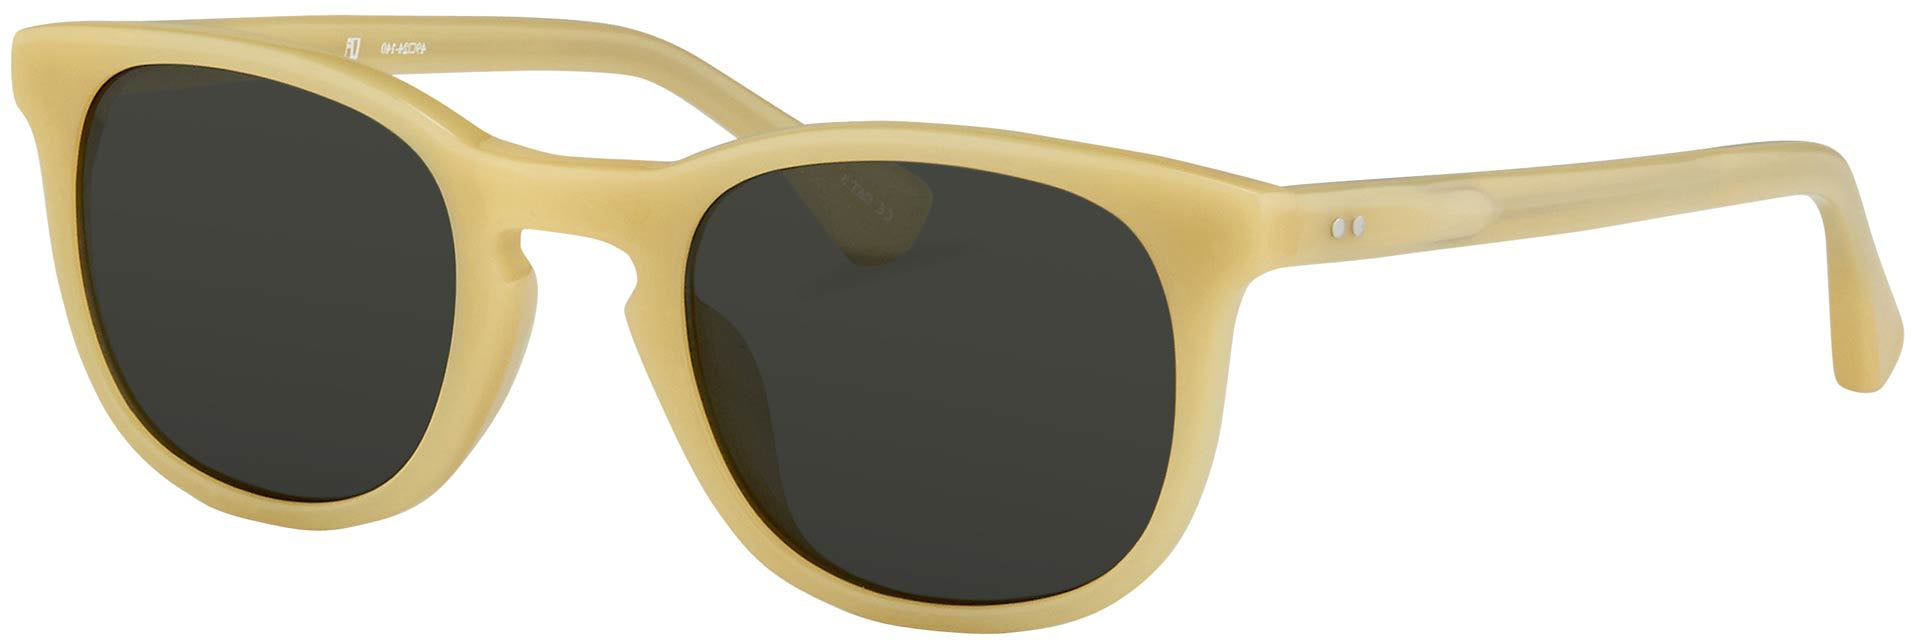 Color_DVN89C4SUN - Dries van Noten 89 C4 D-Frame Sunglasses